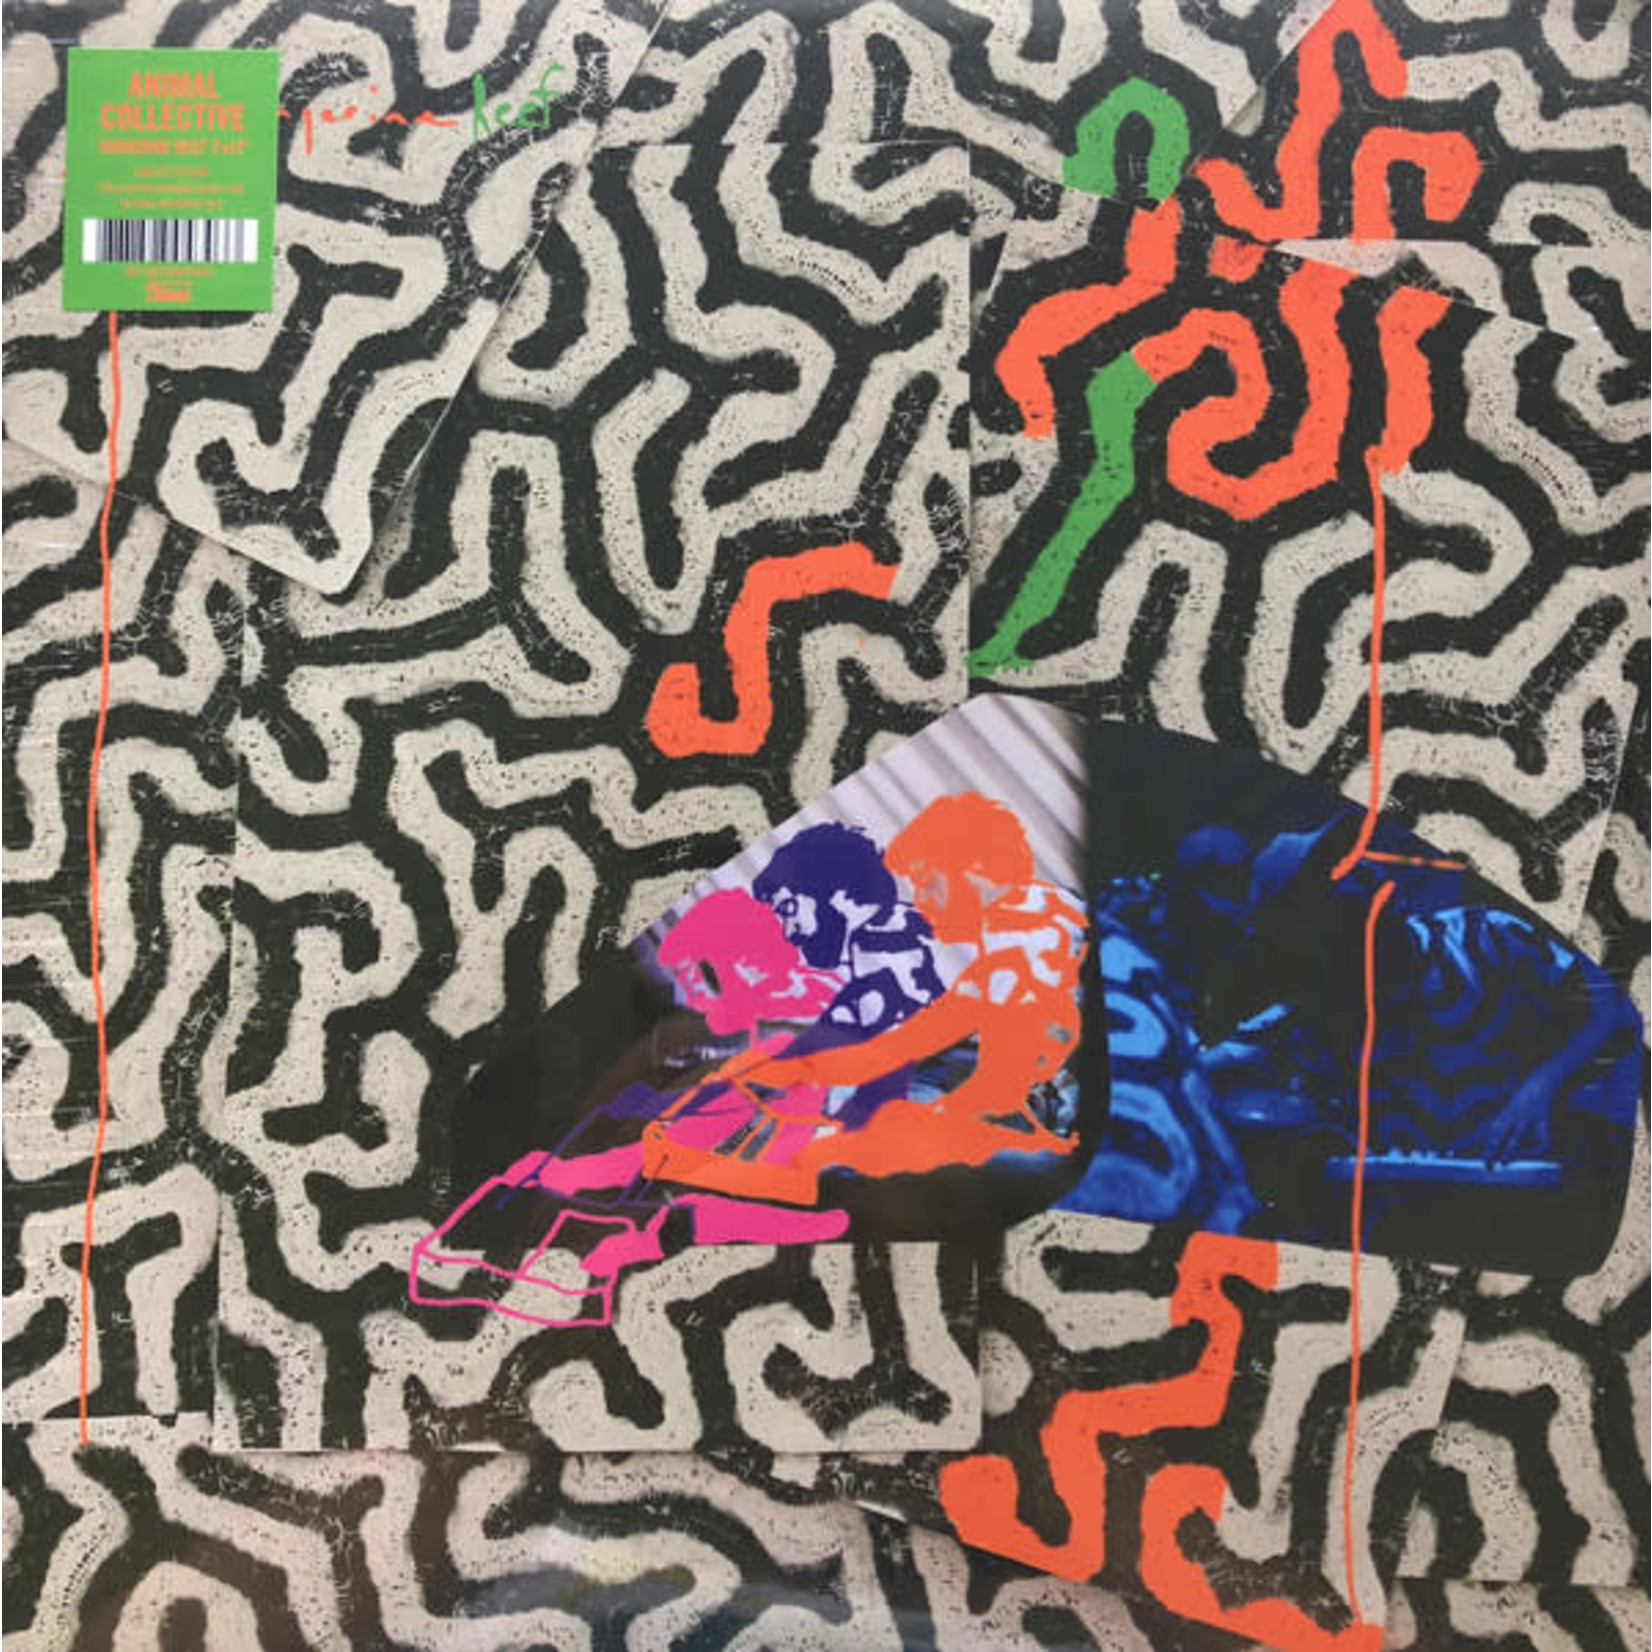 Domino Animal Collective - Tangerine Reef (2LP) [Green]